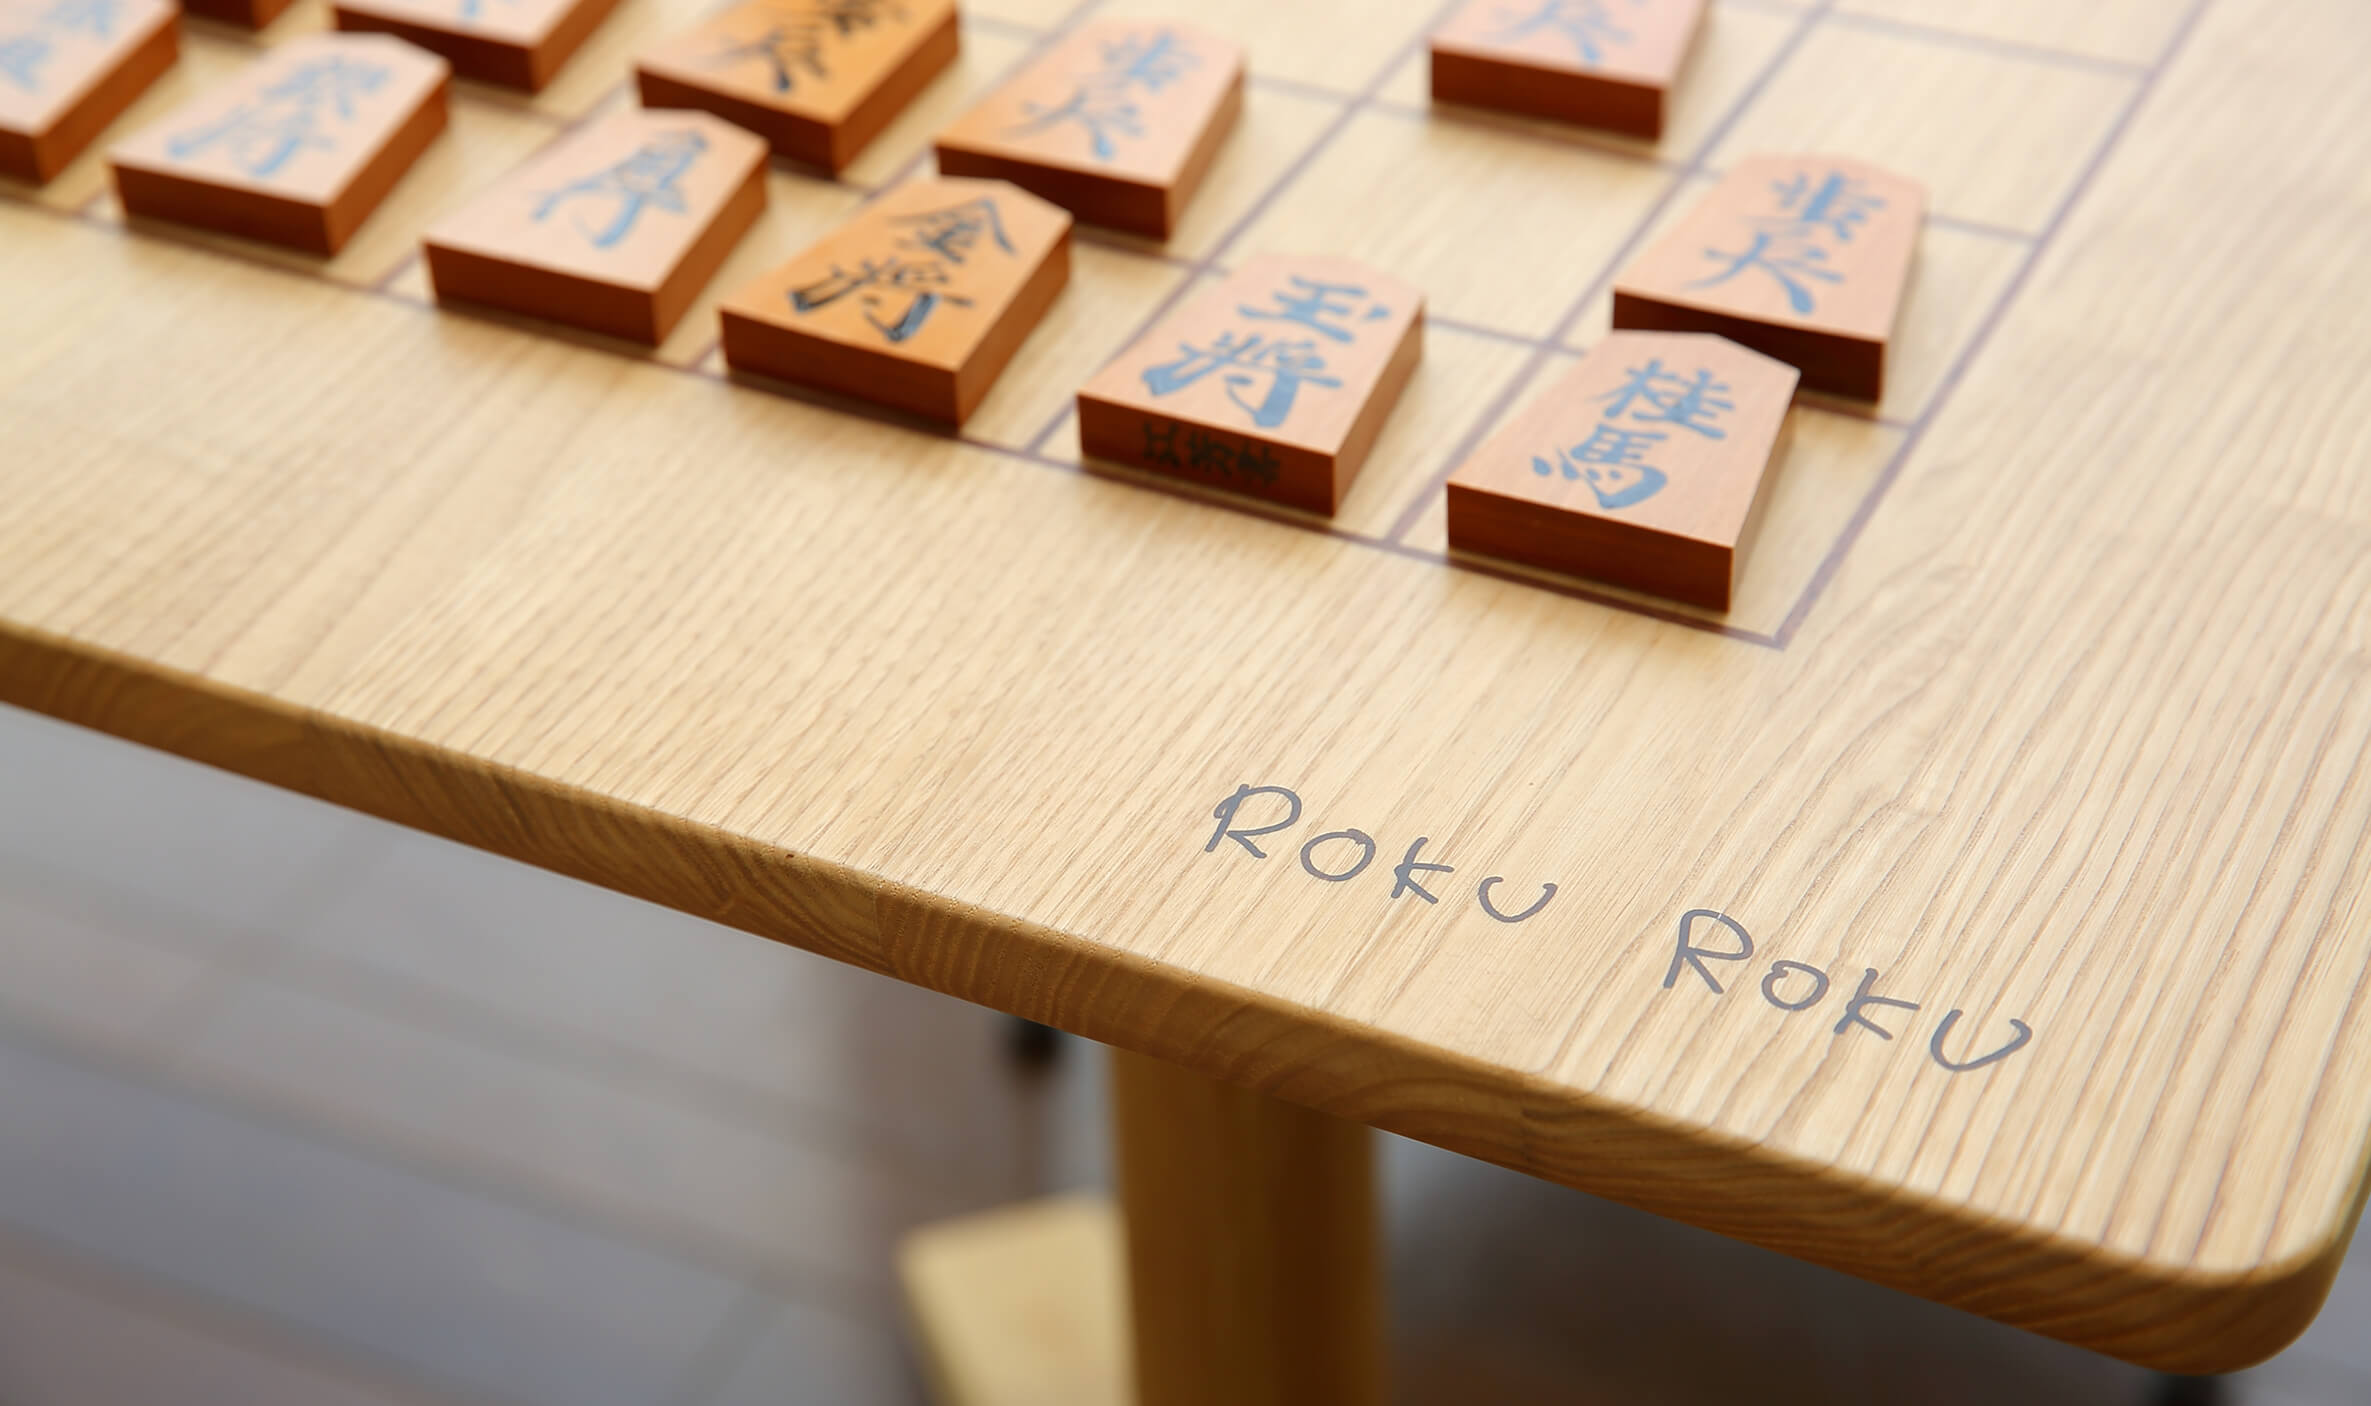 Tendo Shogi Koma - The Craftsmanship Behind Japanese Chess. Learn